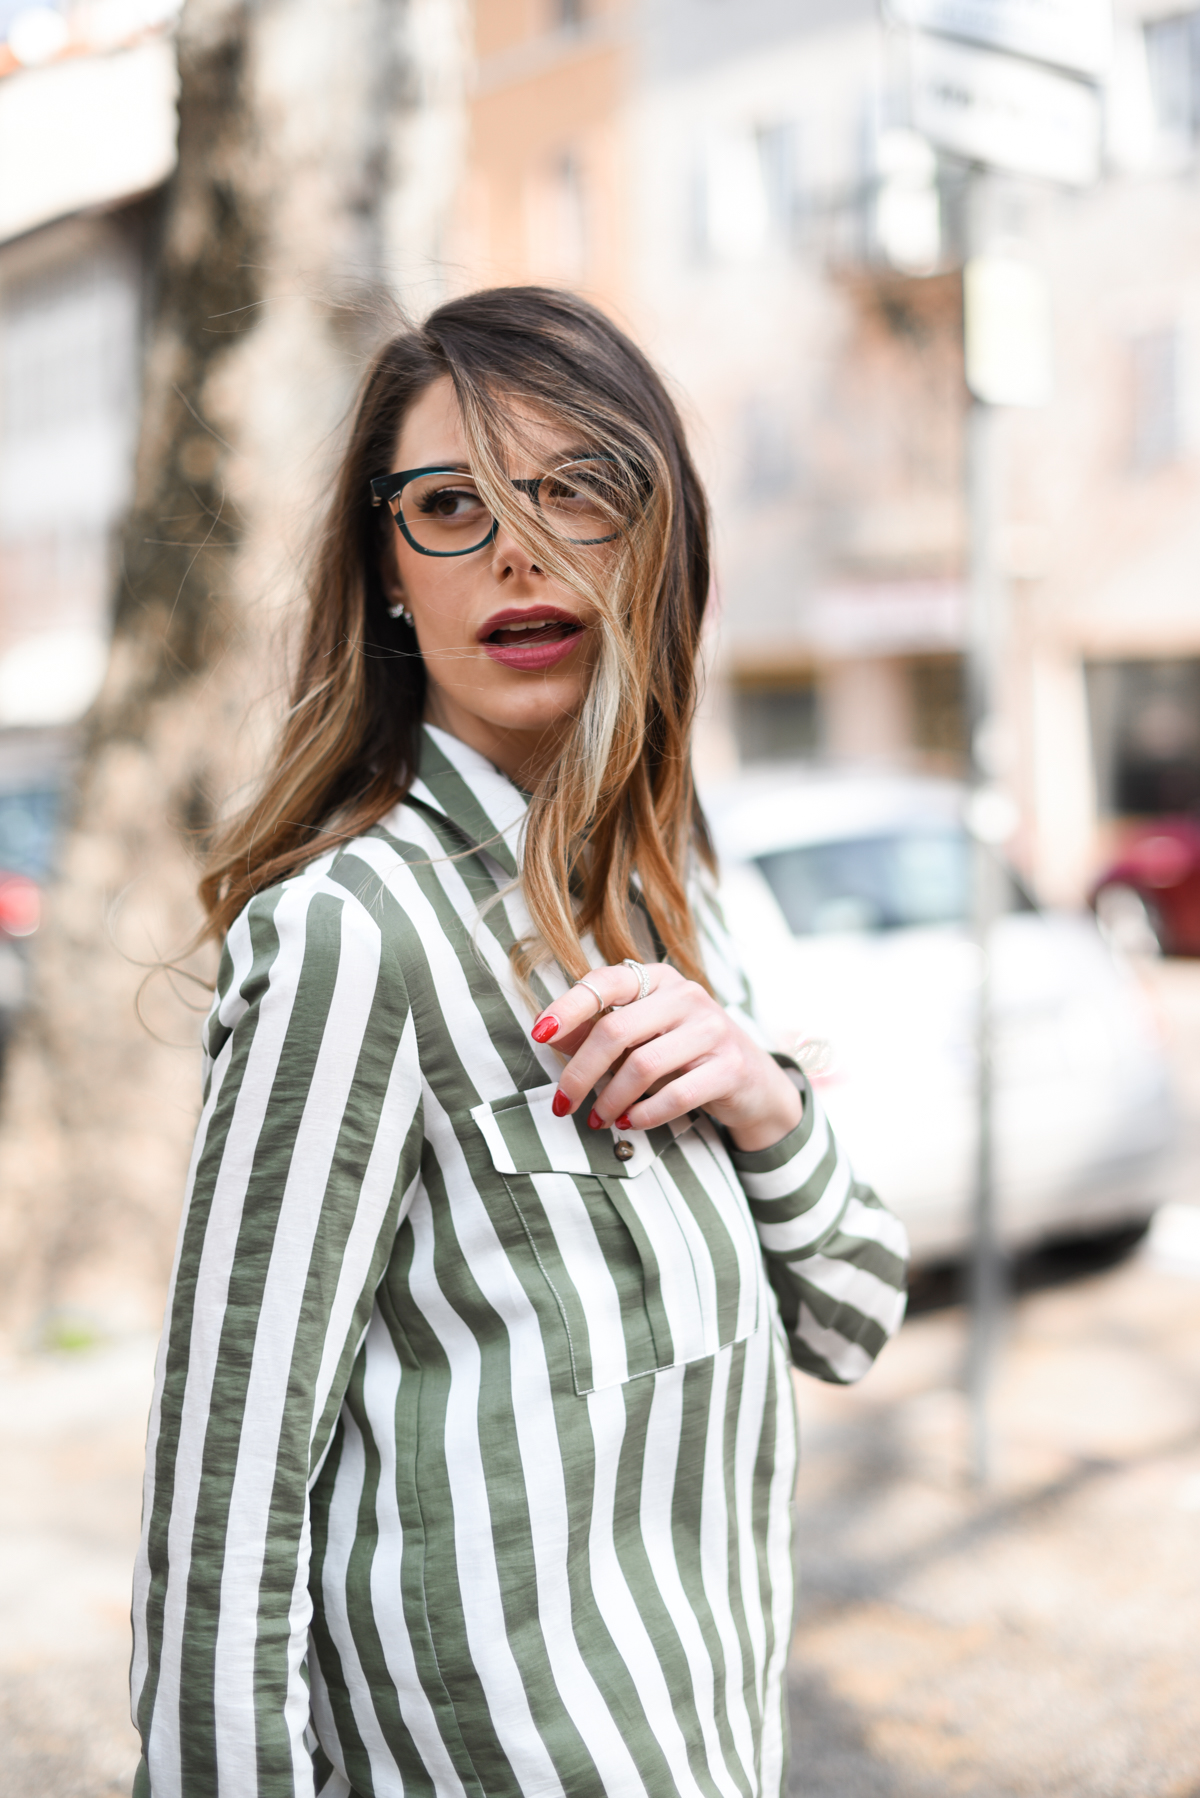 Giulia-de-martin-face-a-face-eyeglasses-lunettes-2018-french-eyewear-BLAST-1-2-blog-eyewear-behind-my-glasses-influncer-blog Face à Face Eyewear Blast